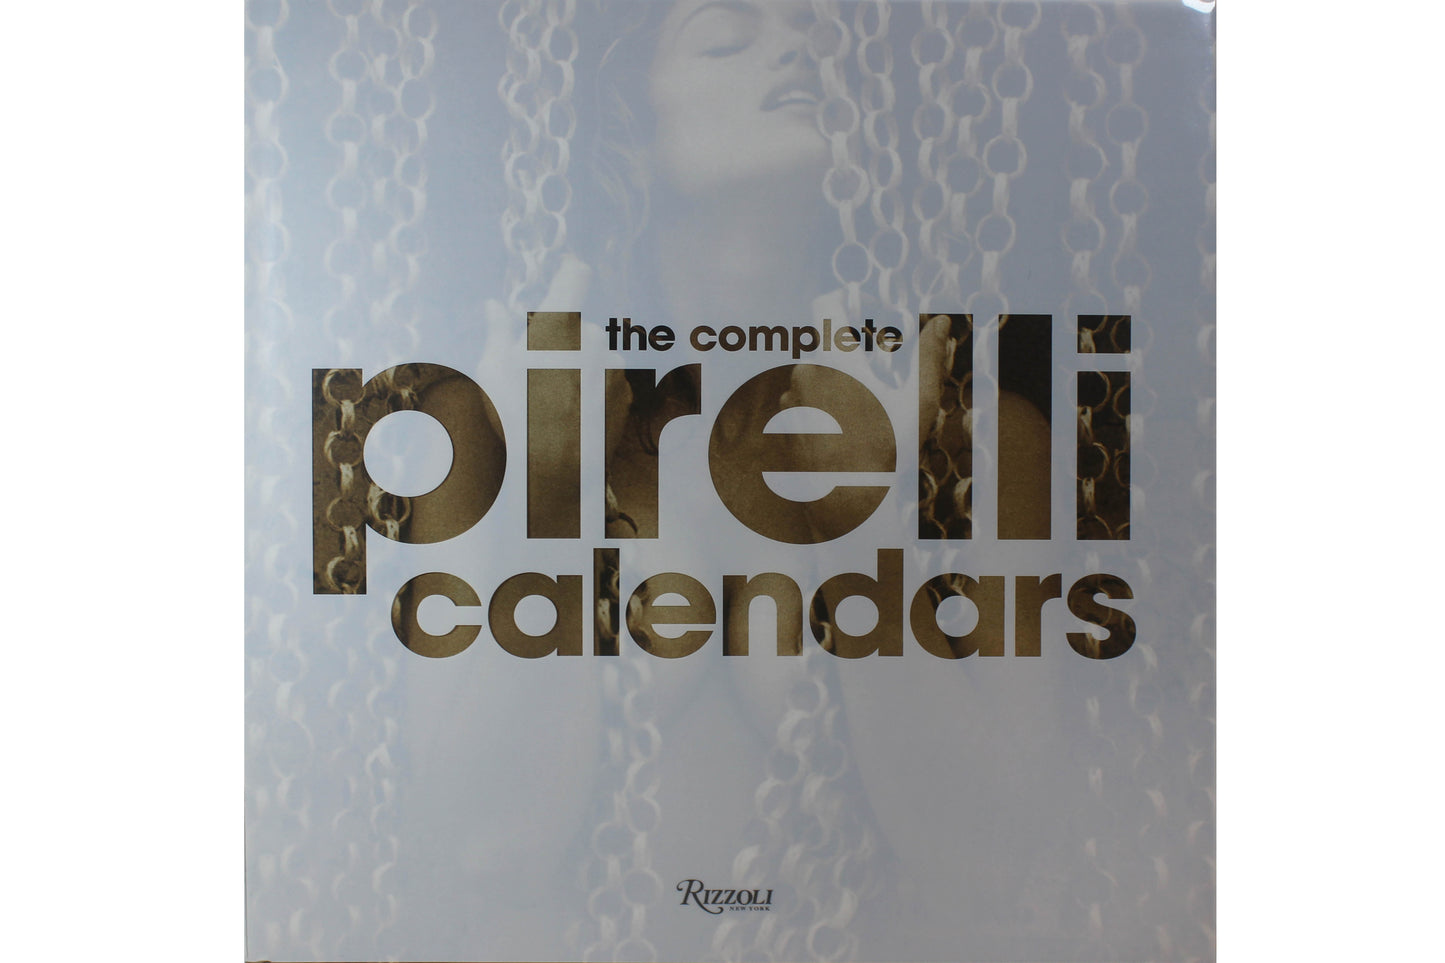 The Complete Pirelli Calendars